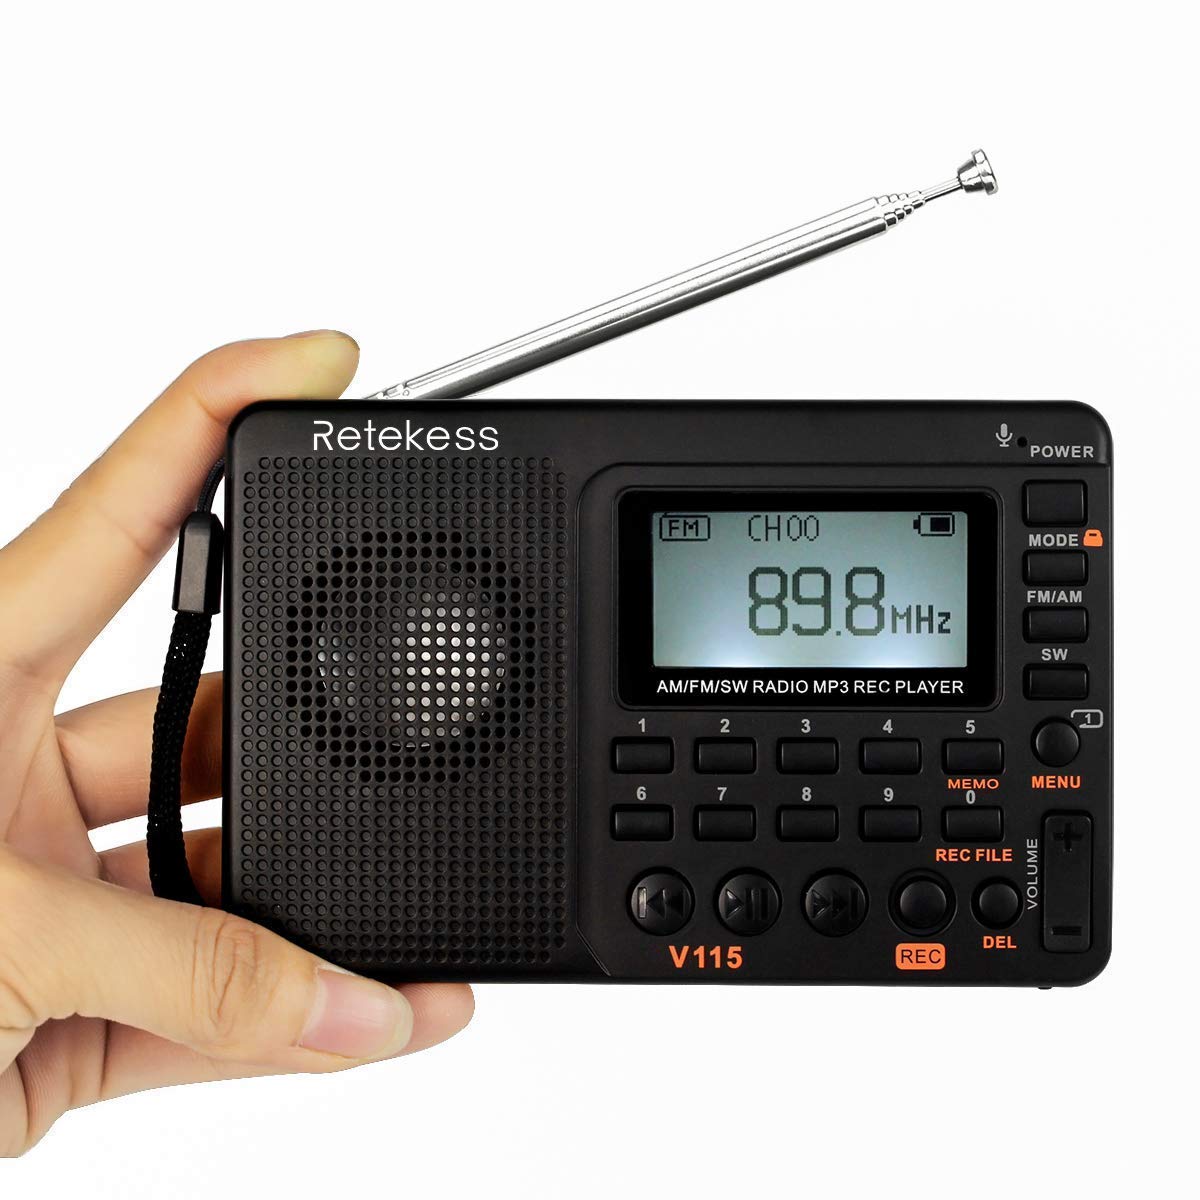 Retekess V115 Digital Portable Receiver MP3 Player AM FM SW Full Band Radio A6U1